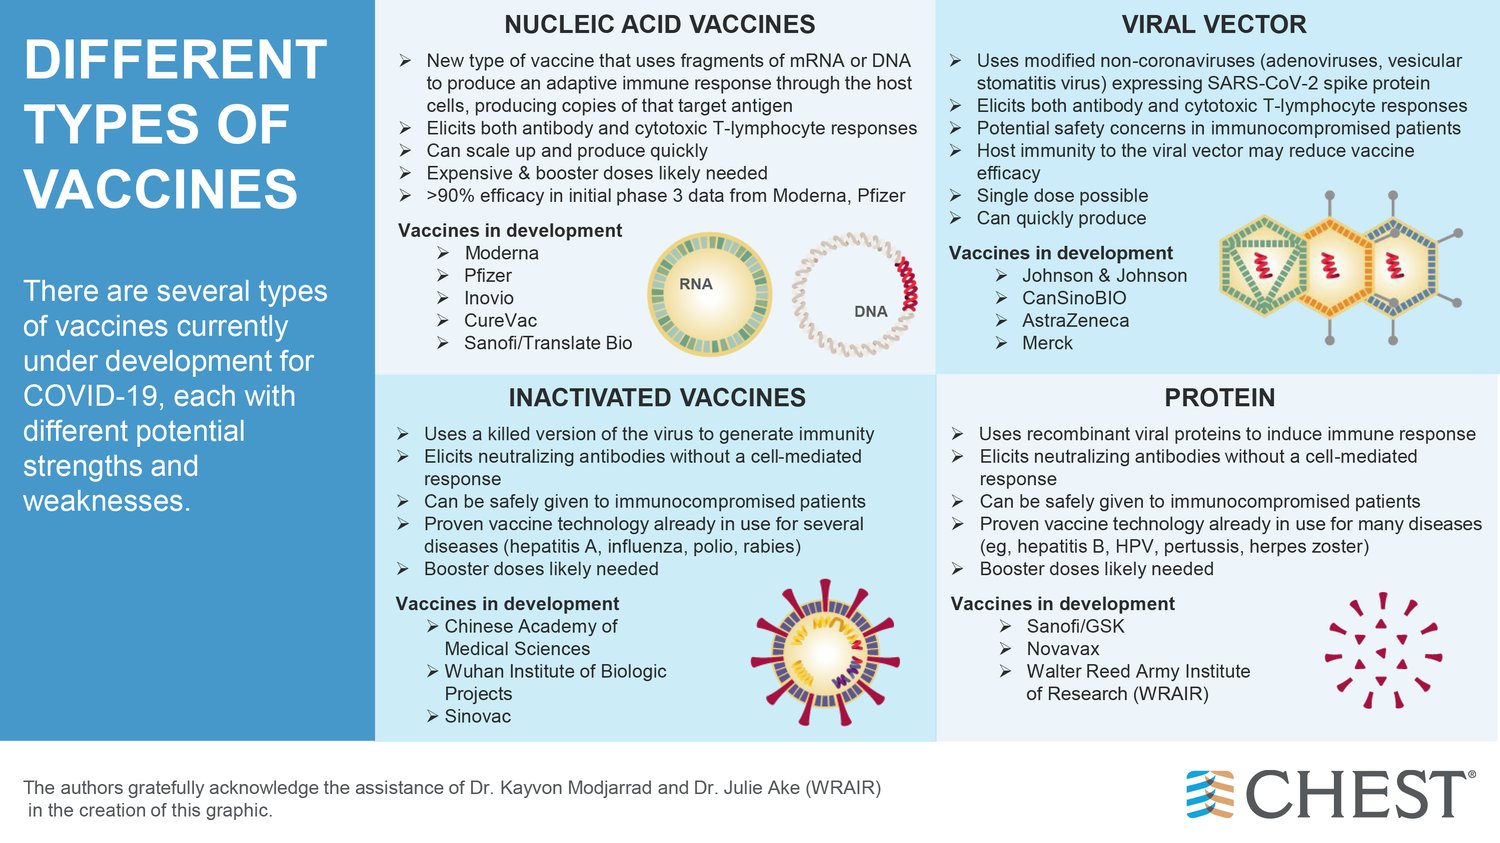 Vaccine Infographic jpg.jpeg?width=1500&name=Vaccine Infographic jpg